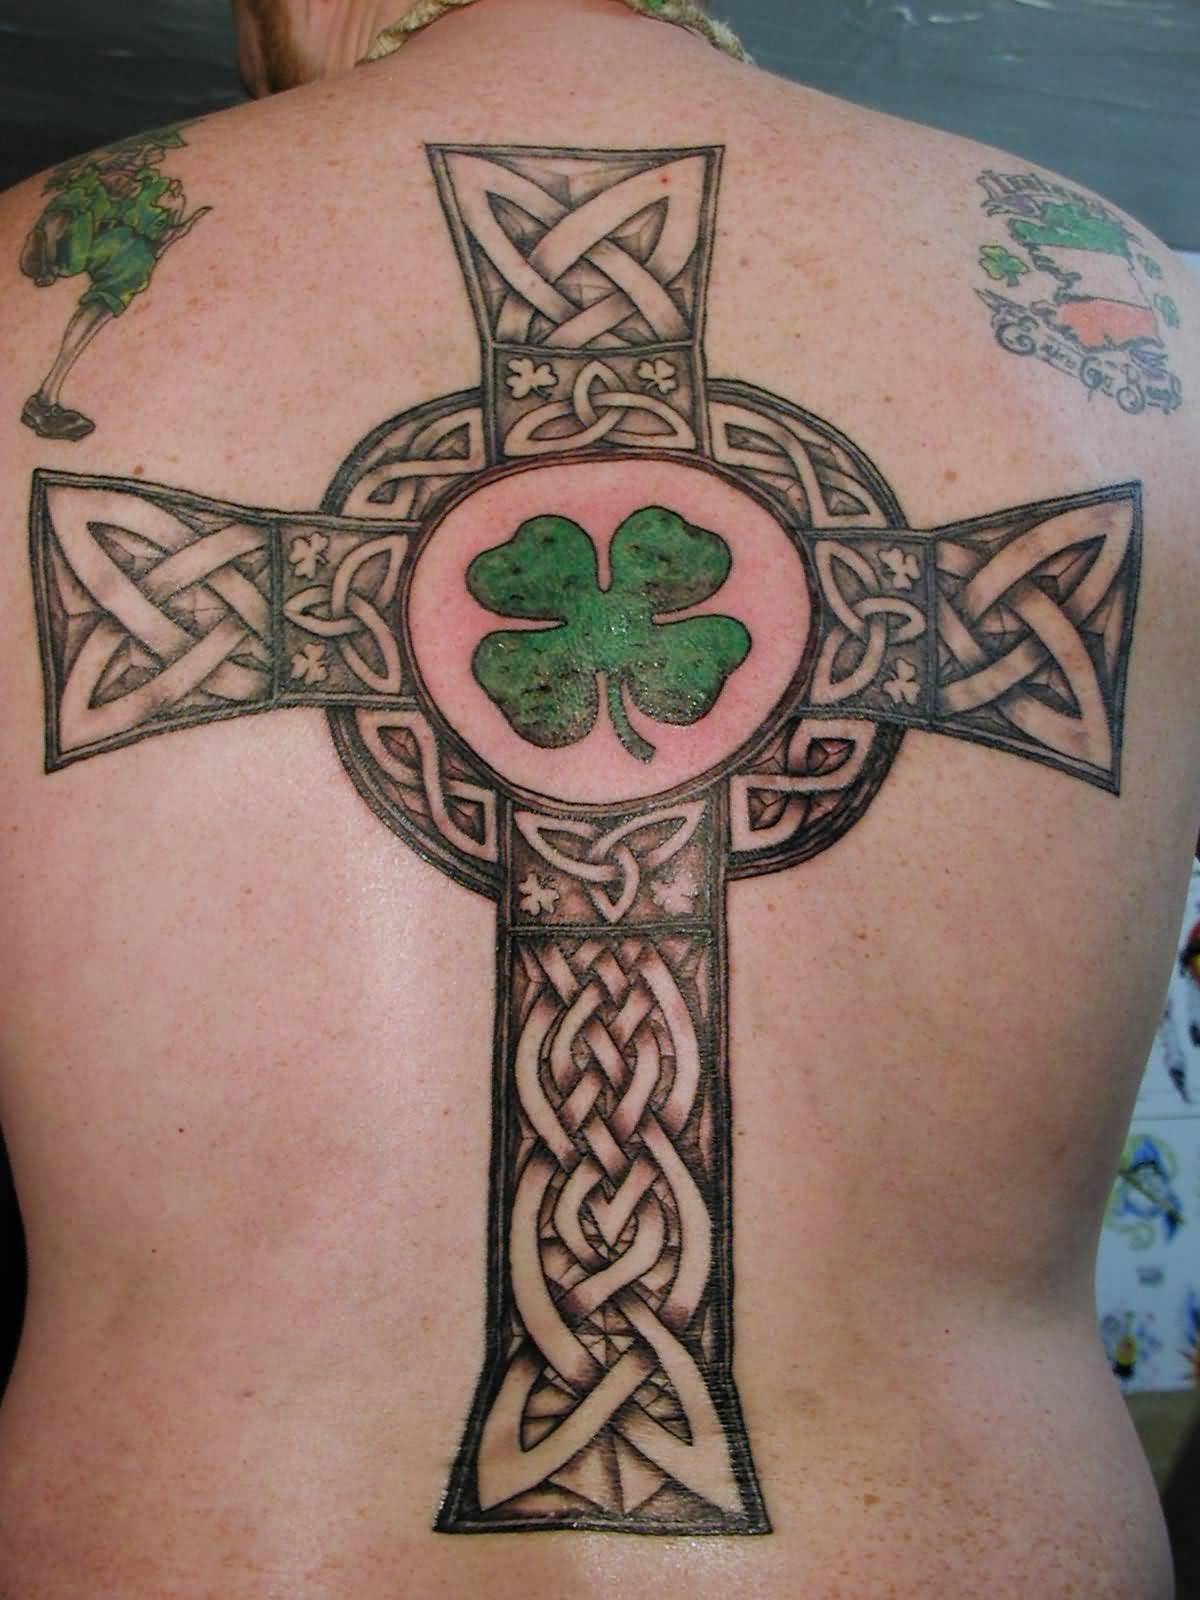 Awesome Large Celtic Cross And Four Leaf Shamrock Tattoo On Full Back